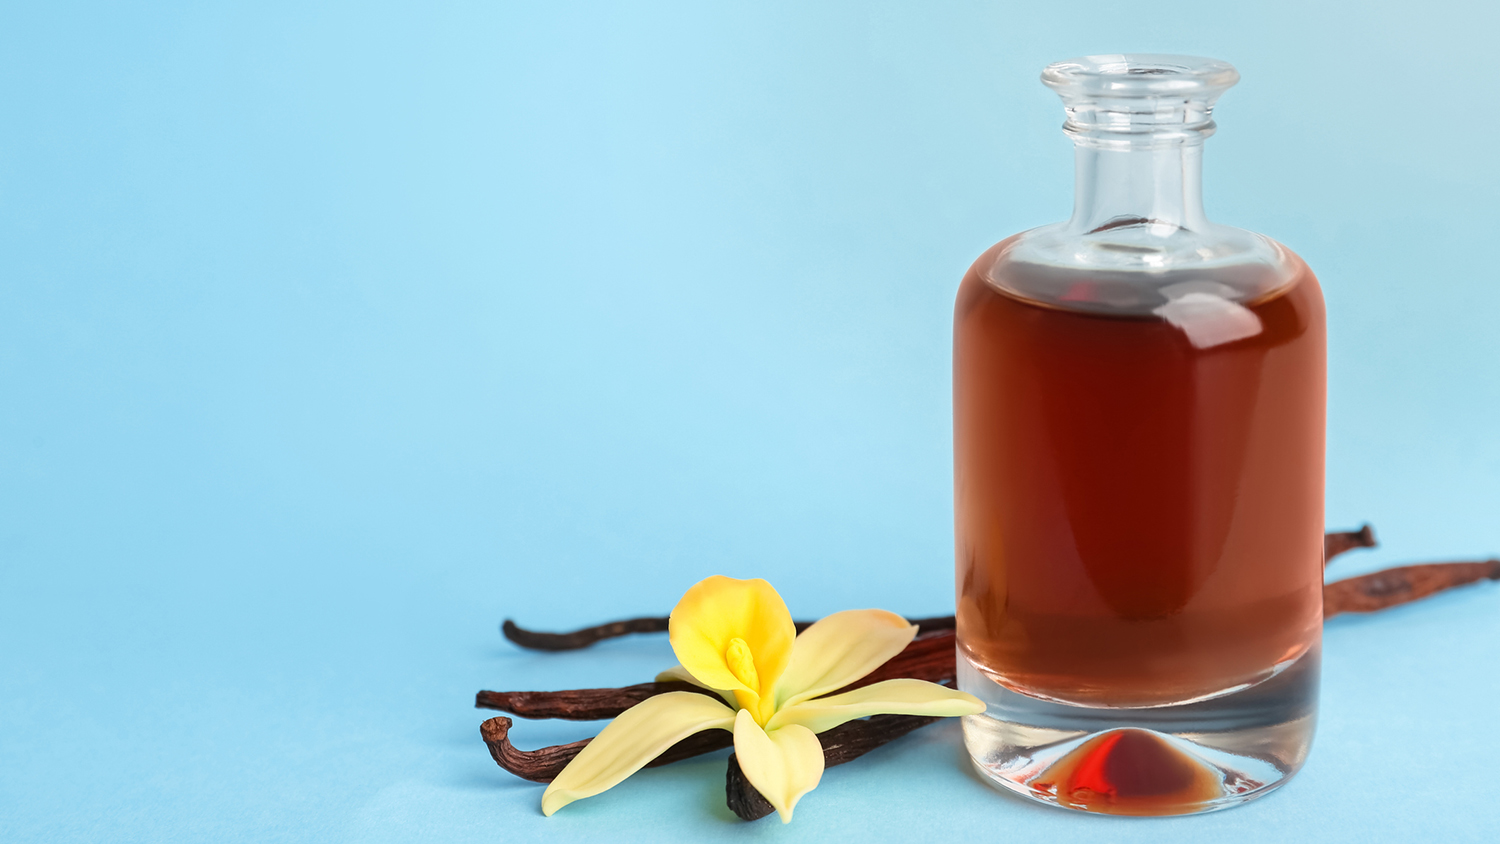  Vanilla Premium Grade Fragrance Oil - 10ml - Scented Oil :  Health & Household